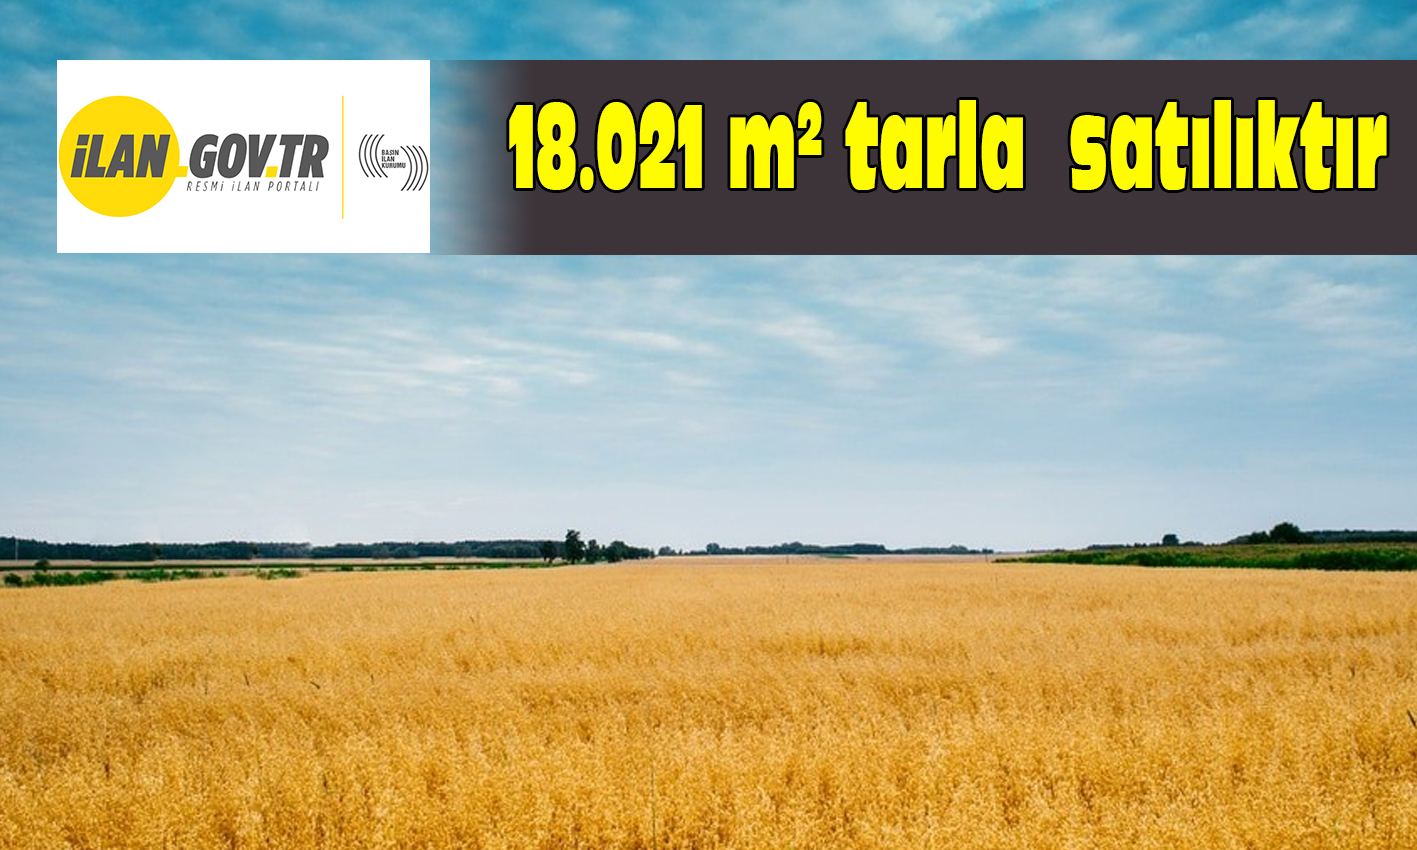 18.021 m² TARLA SATILIKTIR